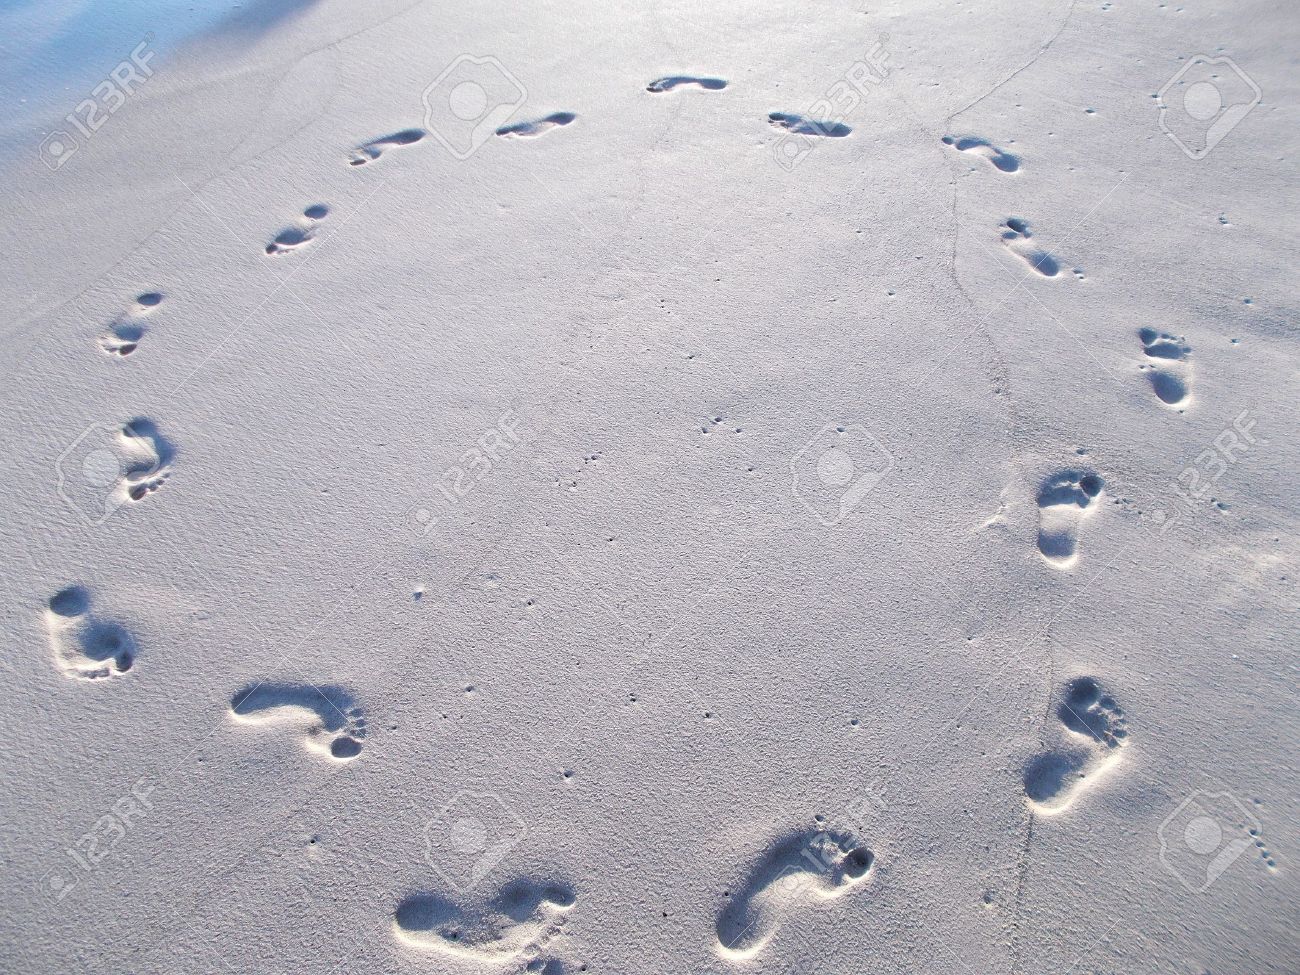 21816641-Footprints-in-circle-on-wet-beach-sand-Stock-Photo.jpg